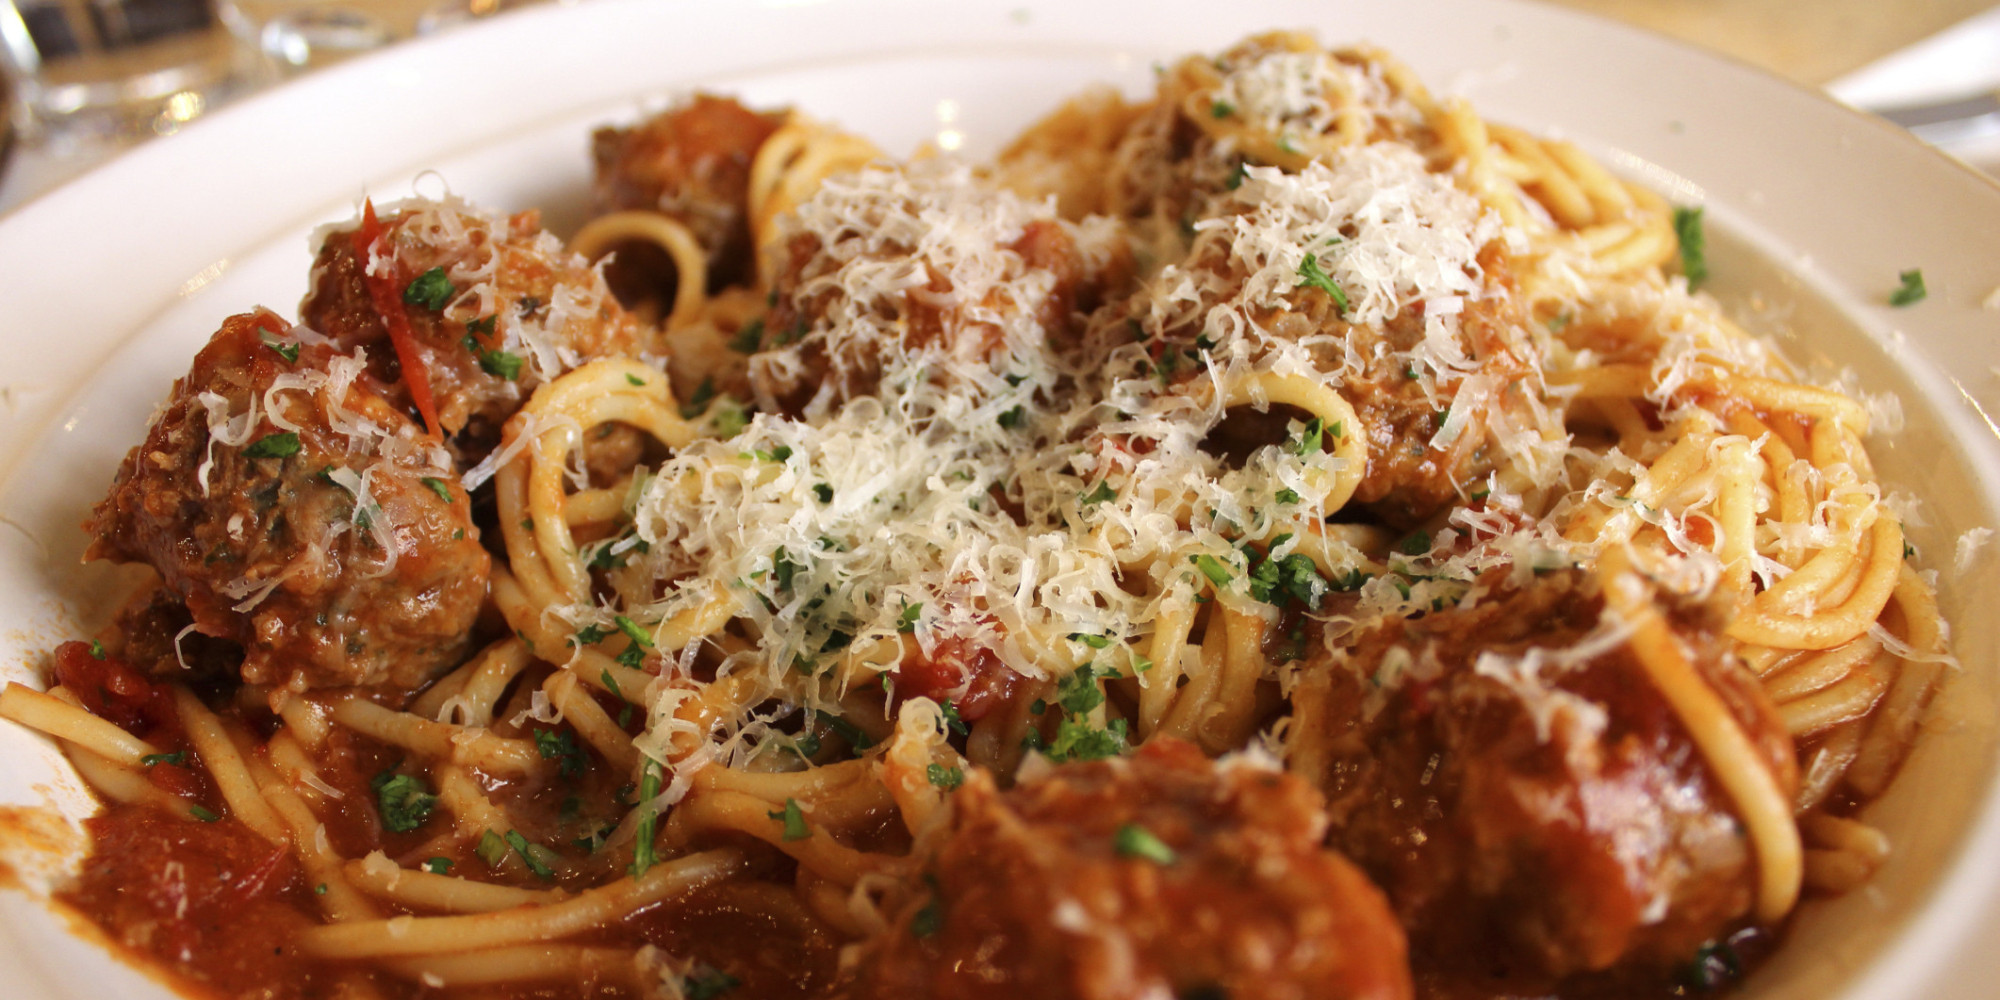 Italian Food Can Cure Impotence, Italian Professor Says ...
